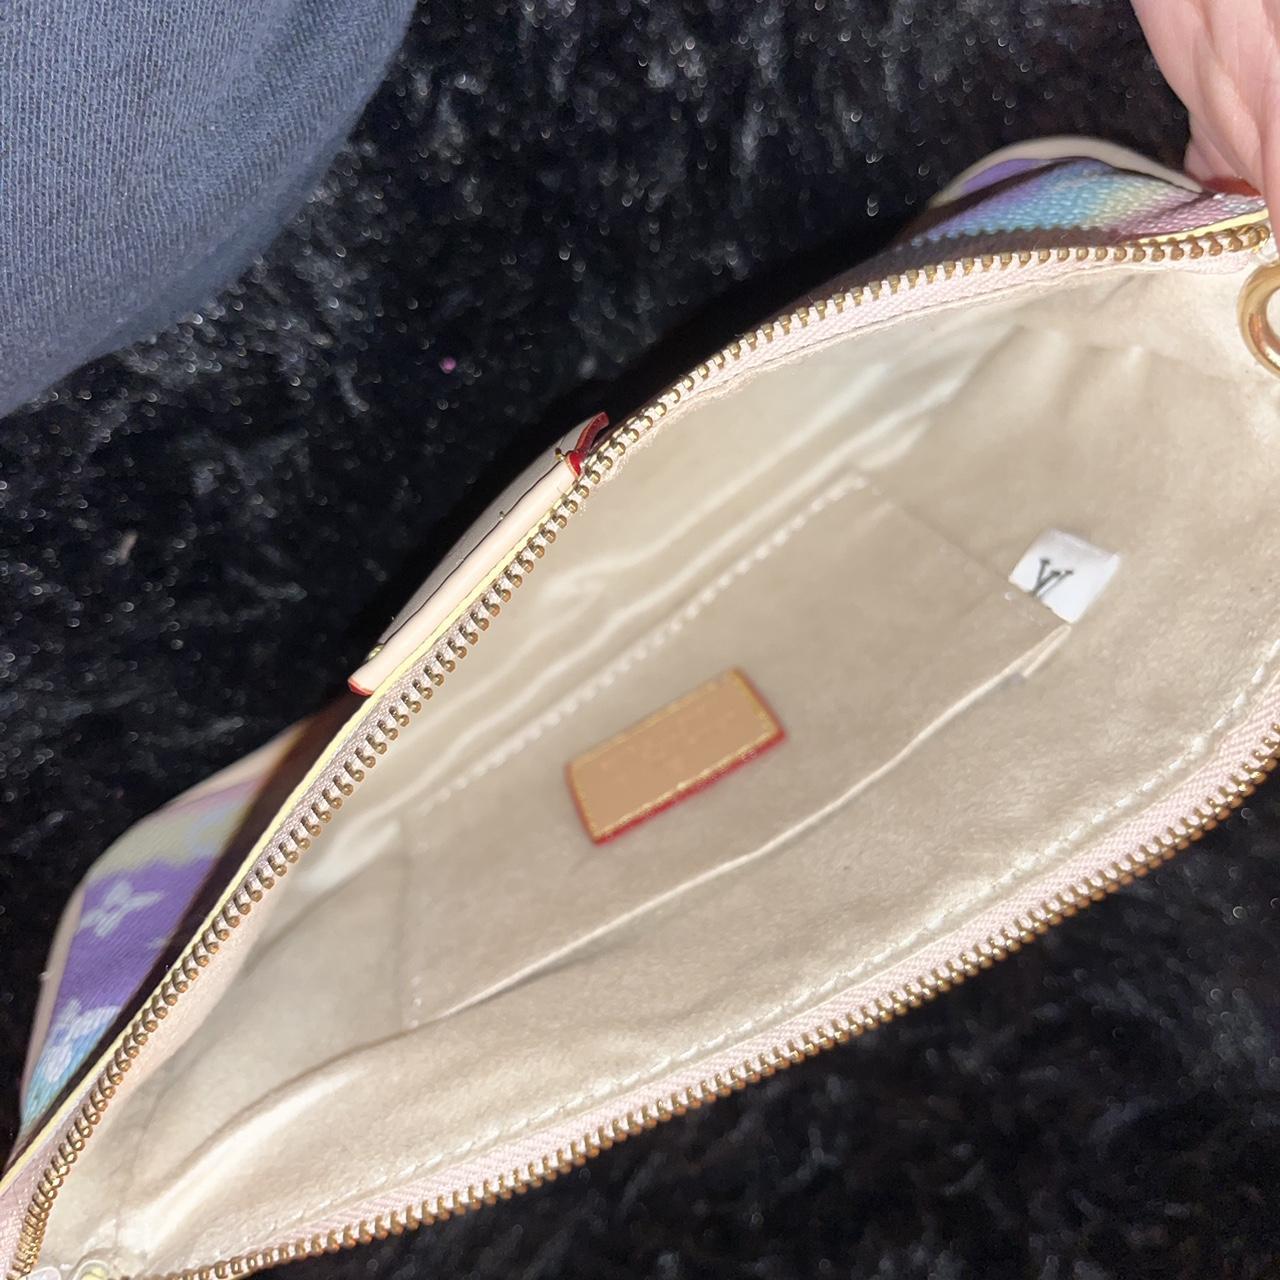 LV cotton candy purse